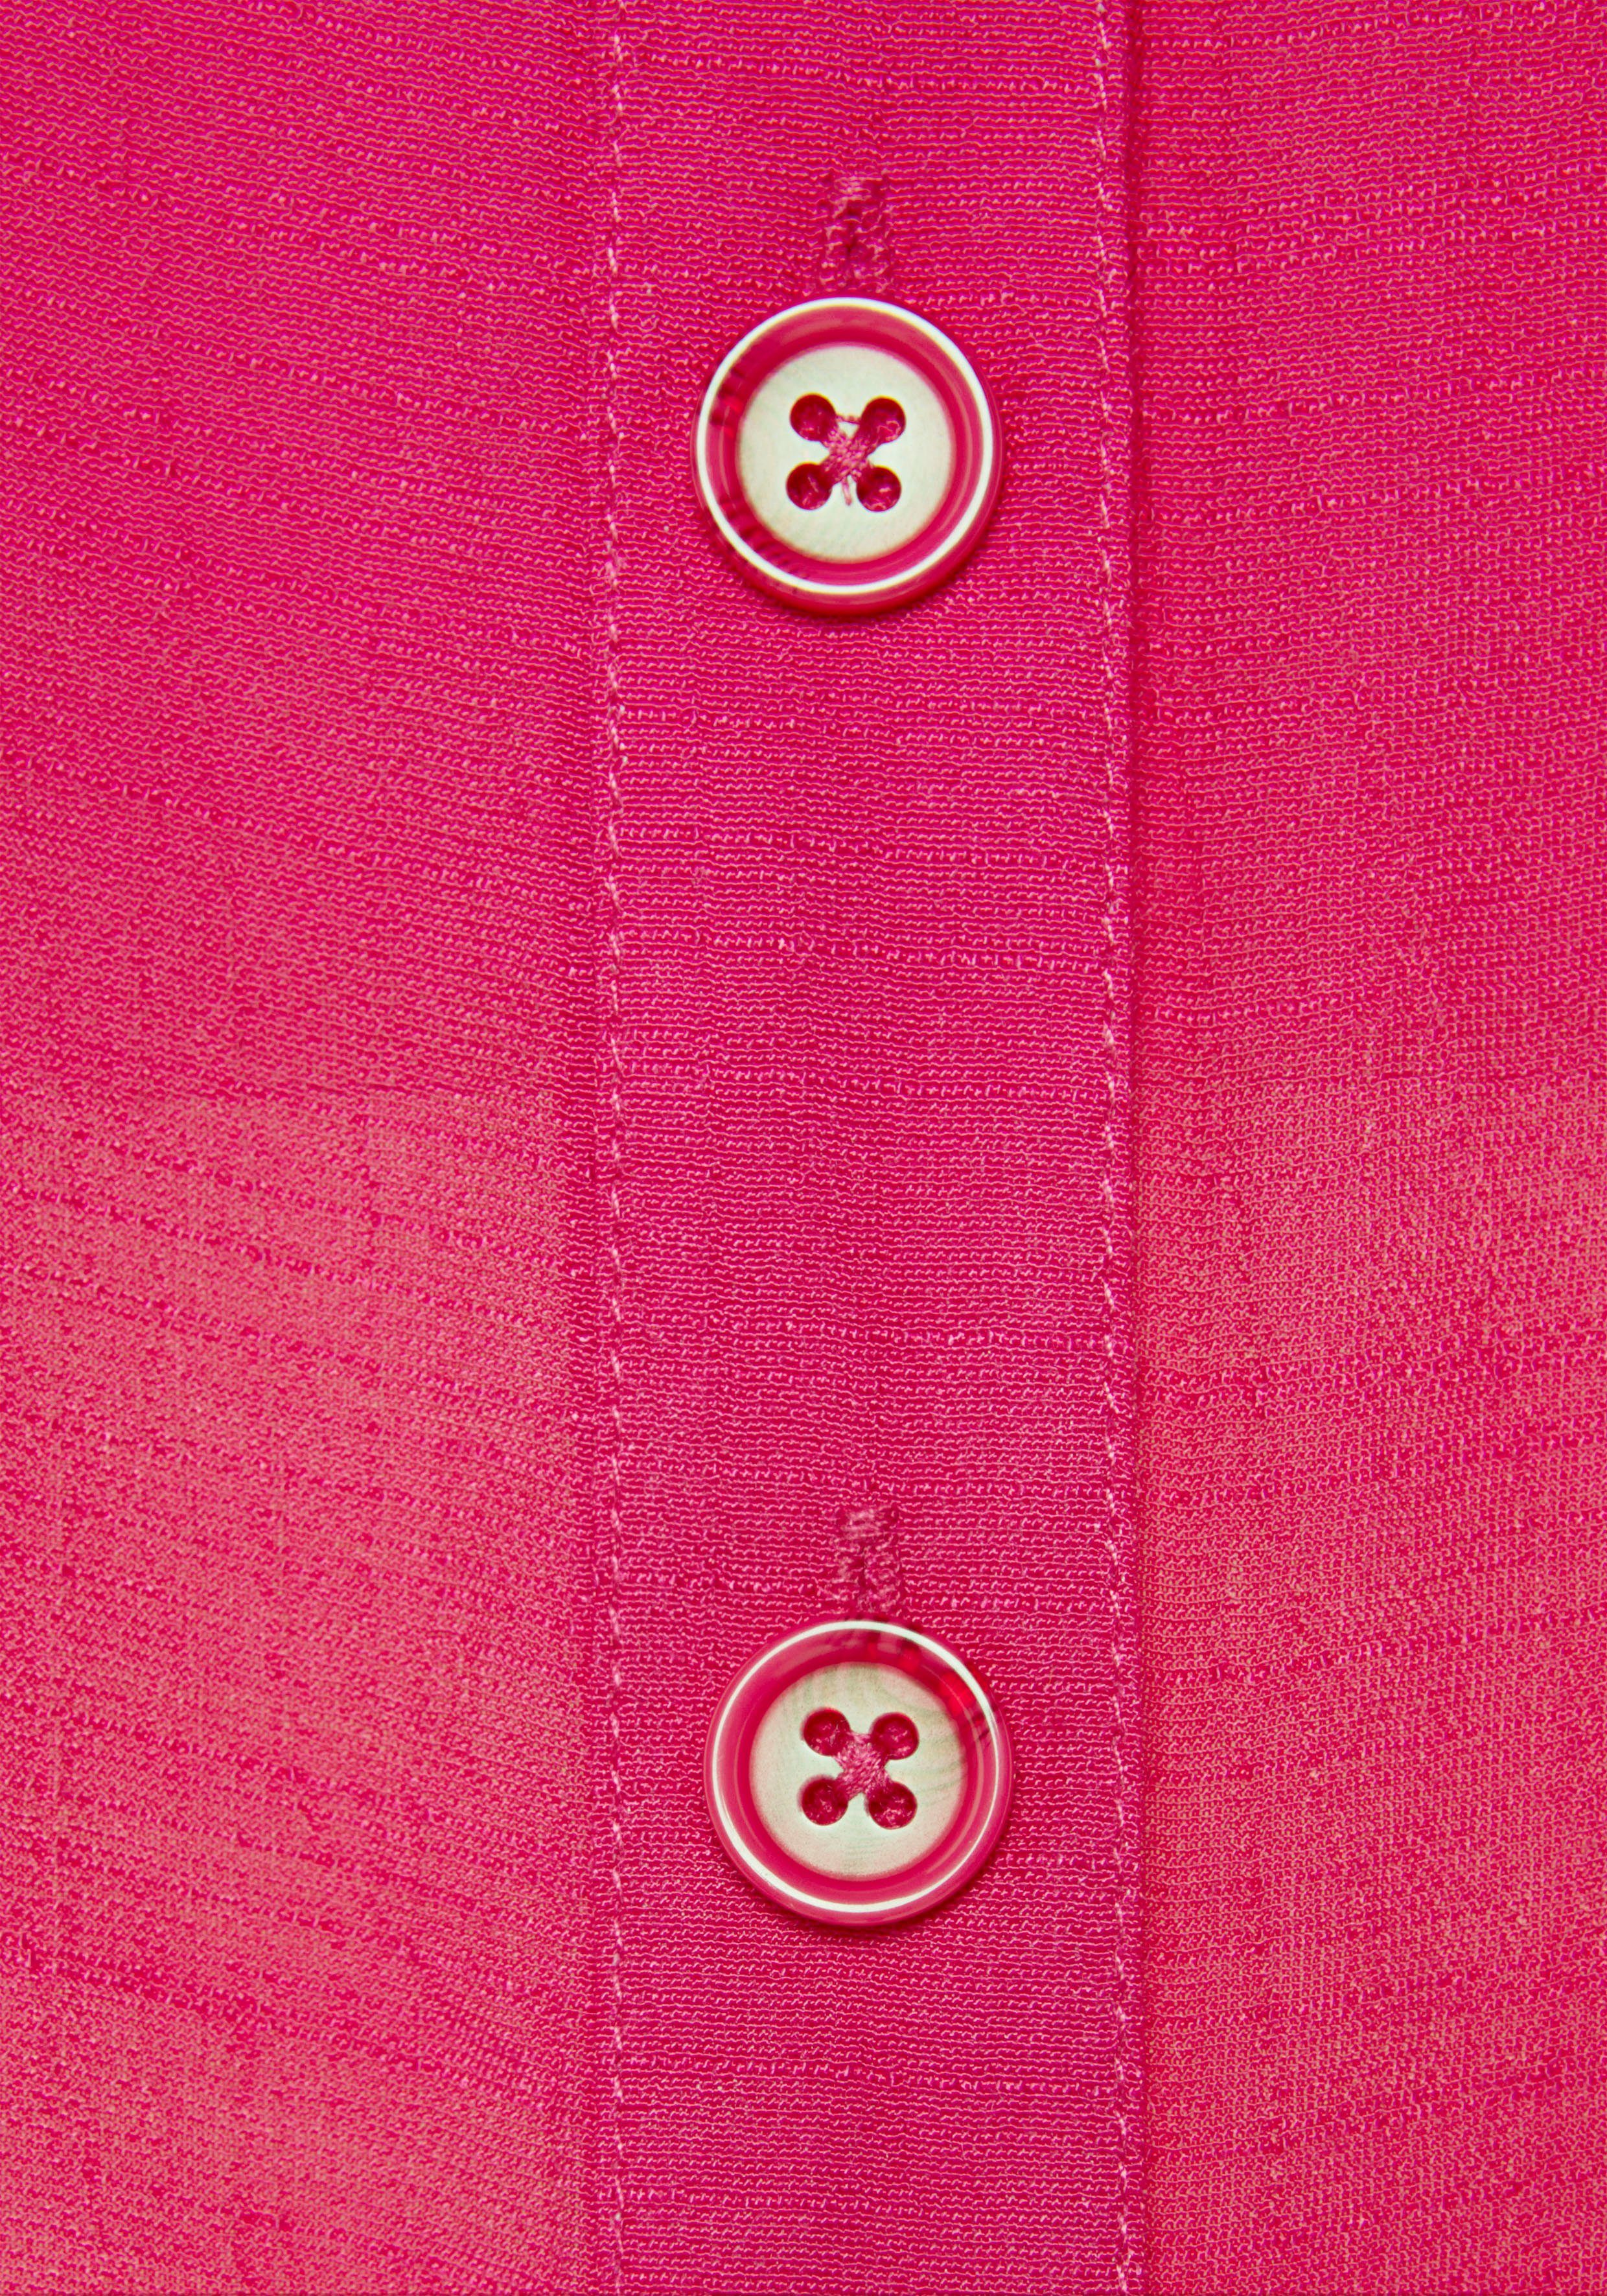 Vivance Kurzarmbluse mit Hemdkragen Knopfleiste, Hemdbluse, und pink Strandmode